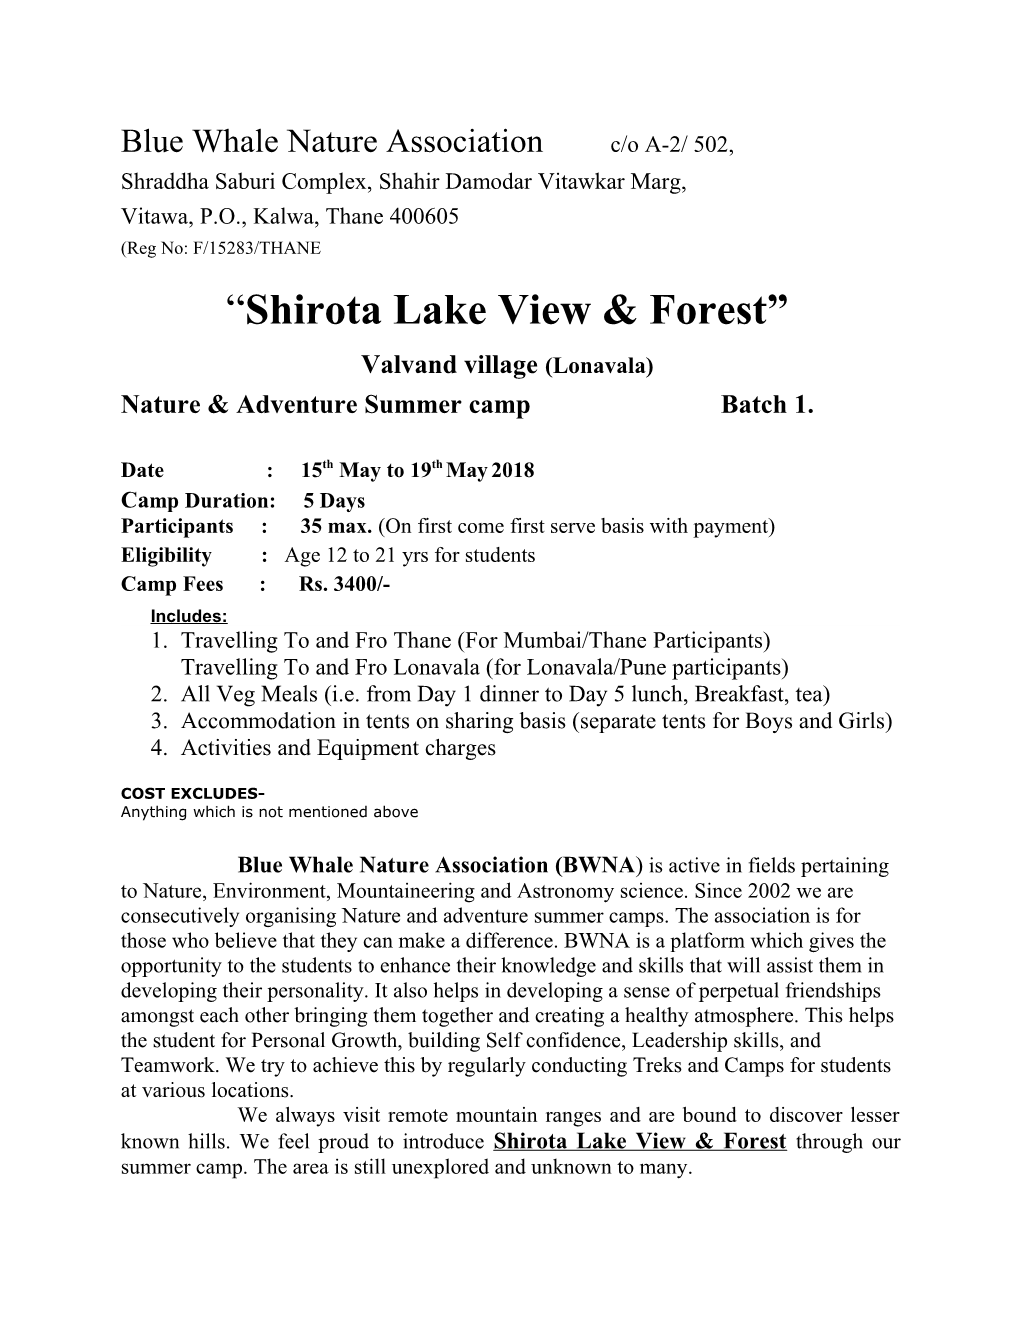 Shirota Lake View & Forest